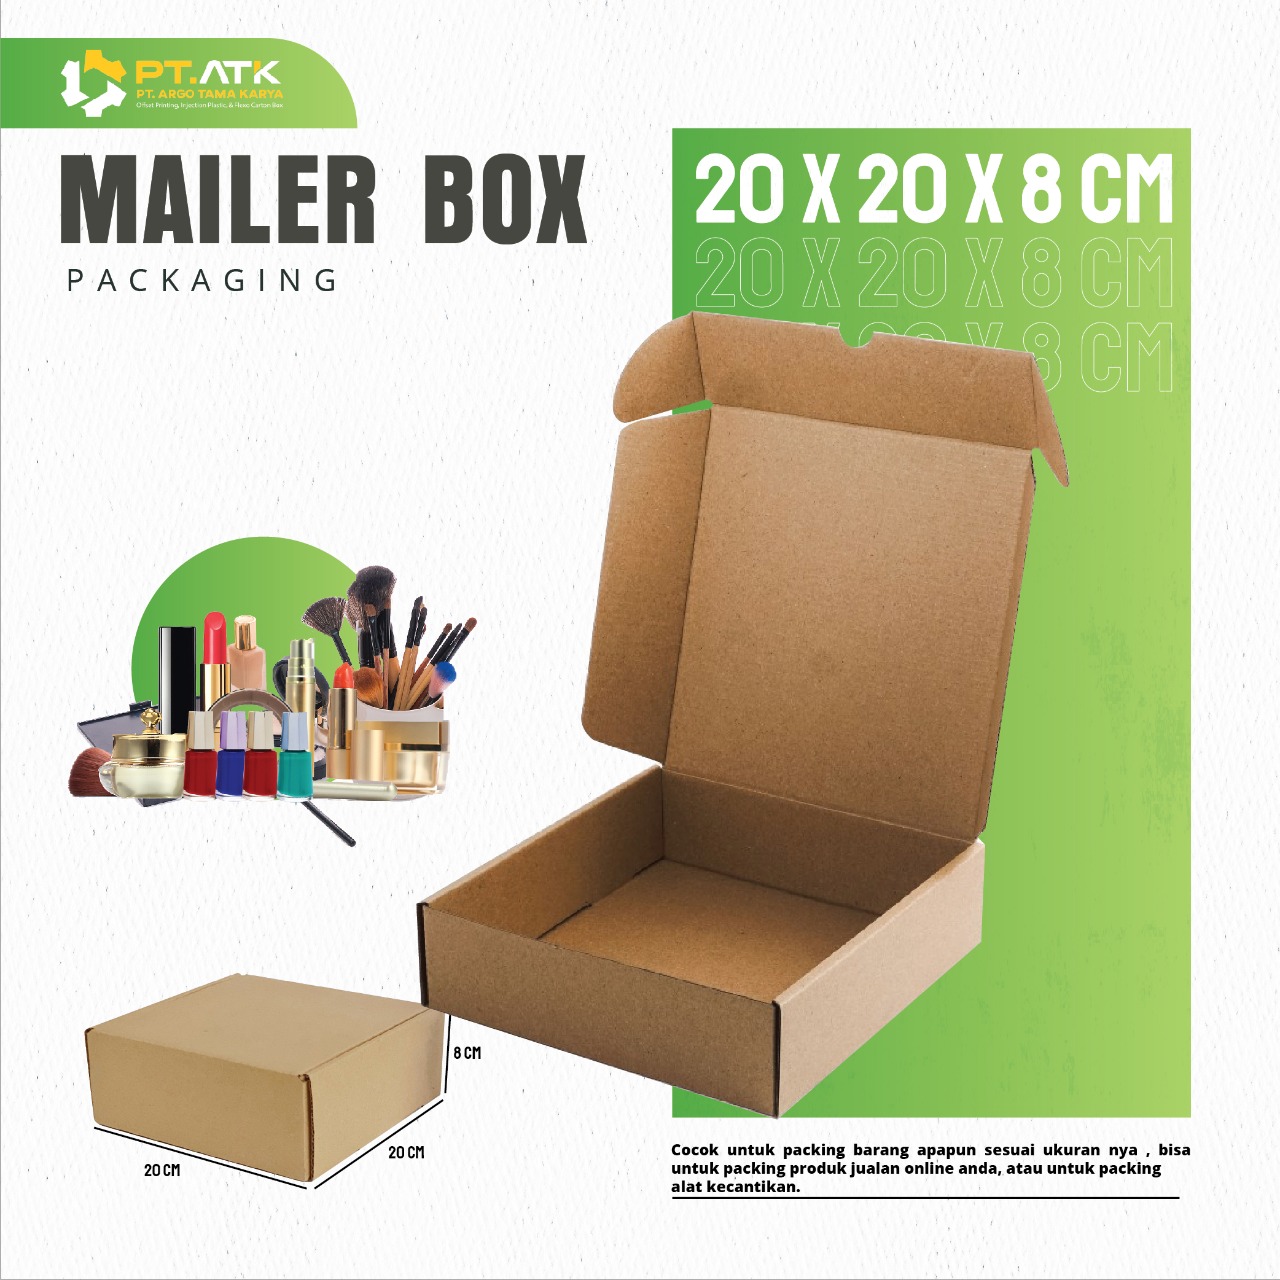 Mailer Box 20x20x8